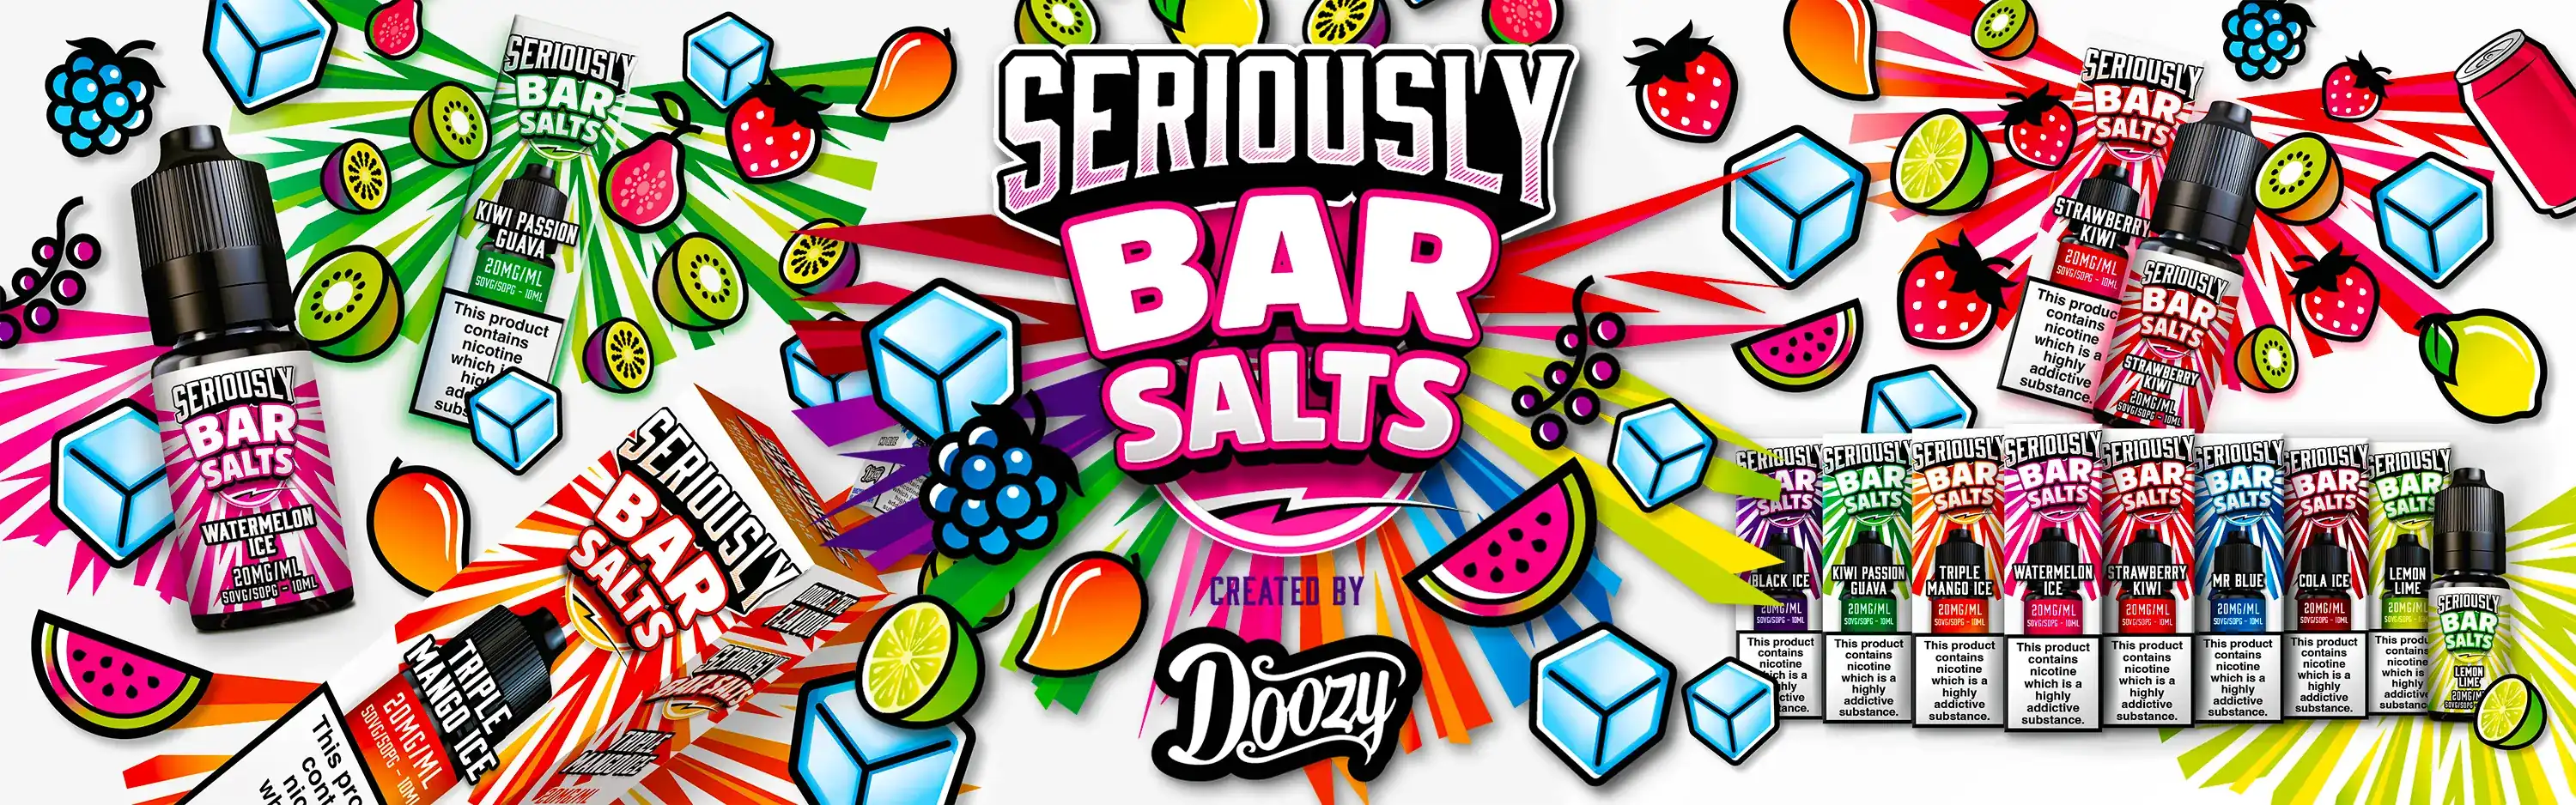 Doozy Bar Salts Web Banner